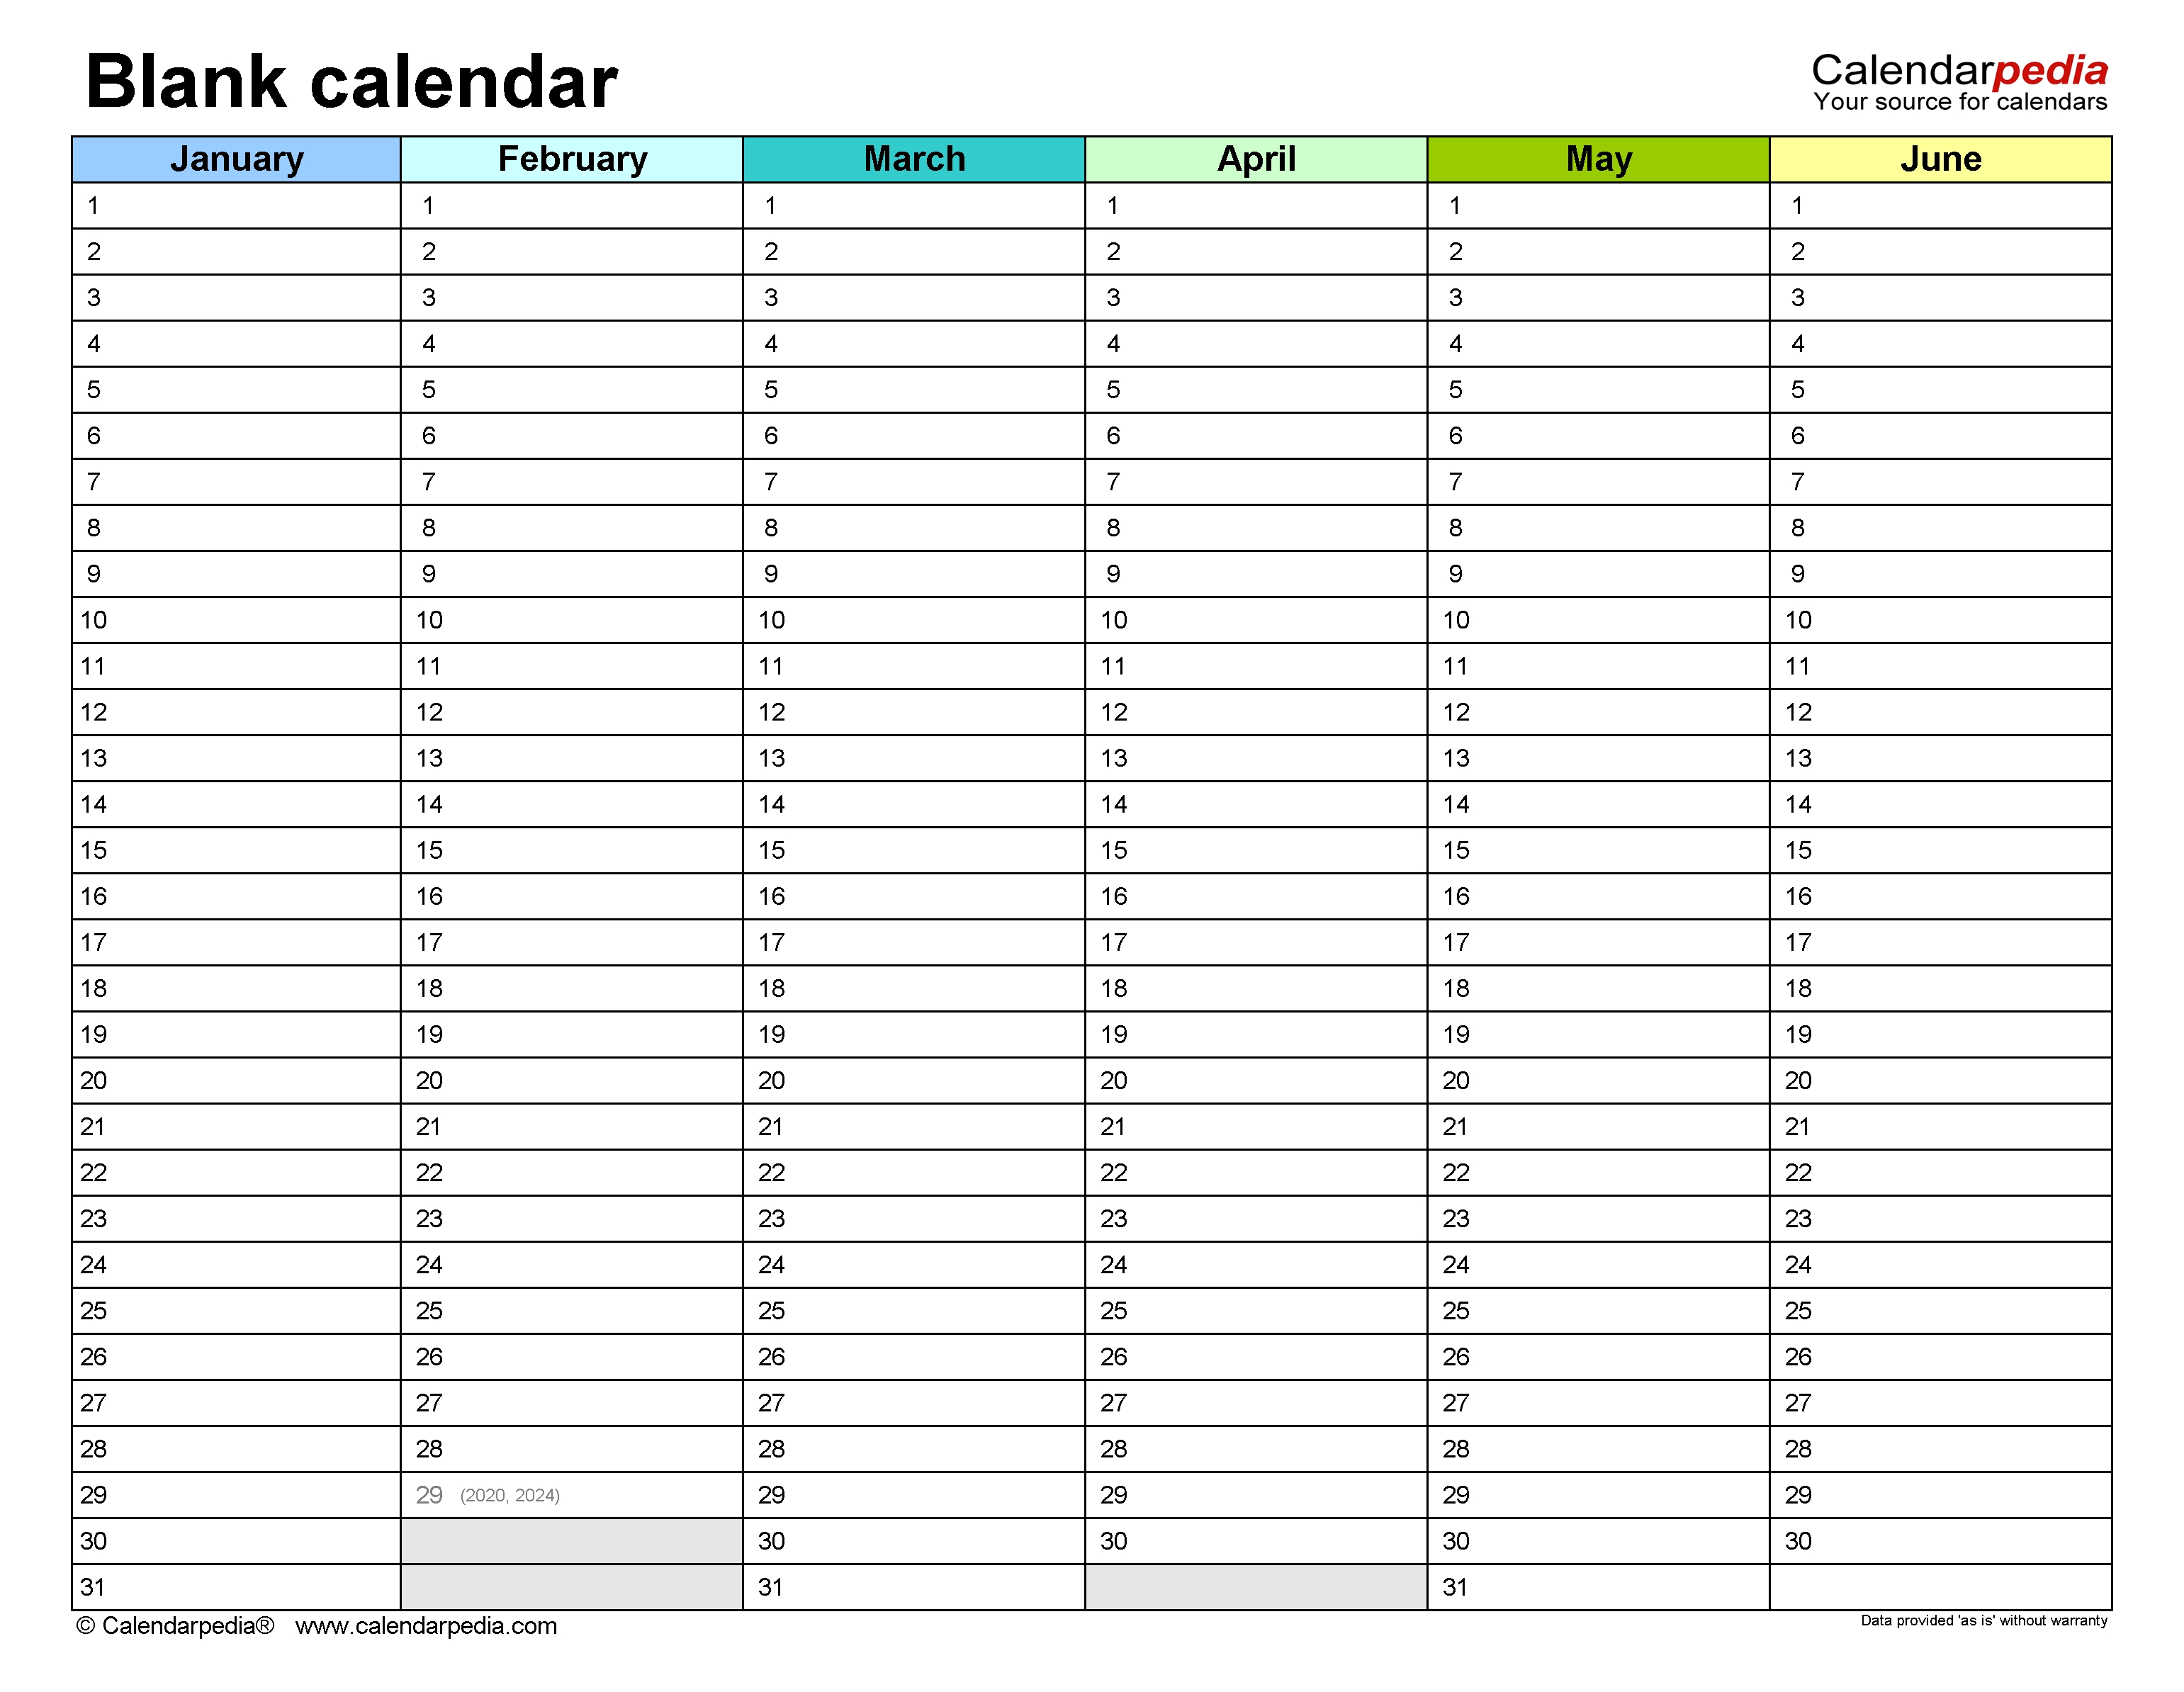 Blank Calendars - Free Printable Microsoft Excel Templates